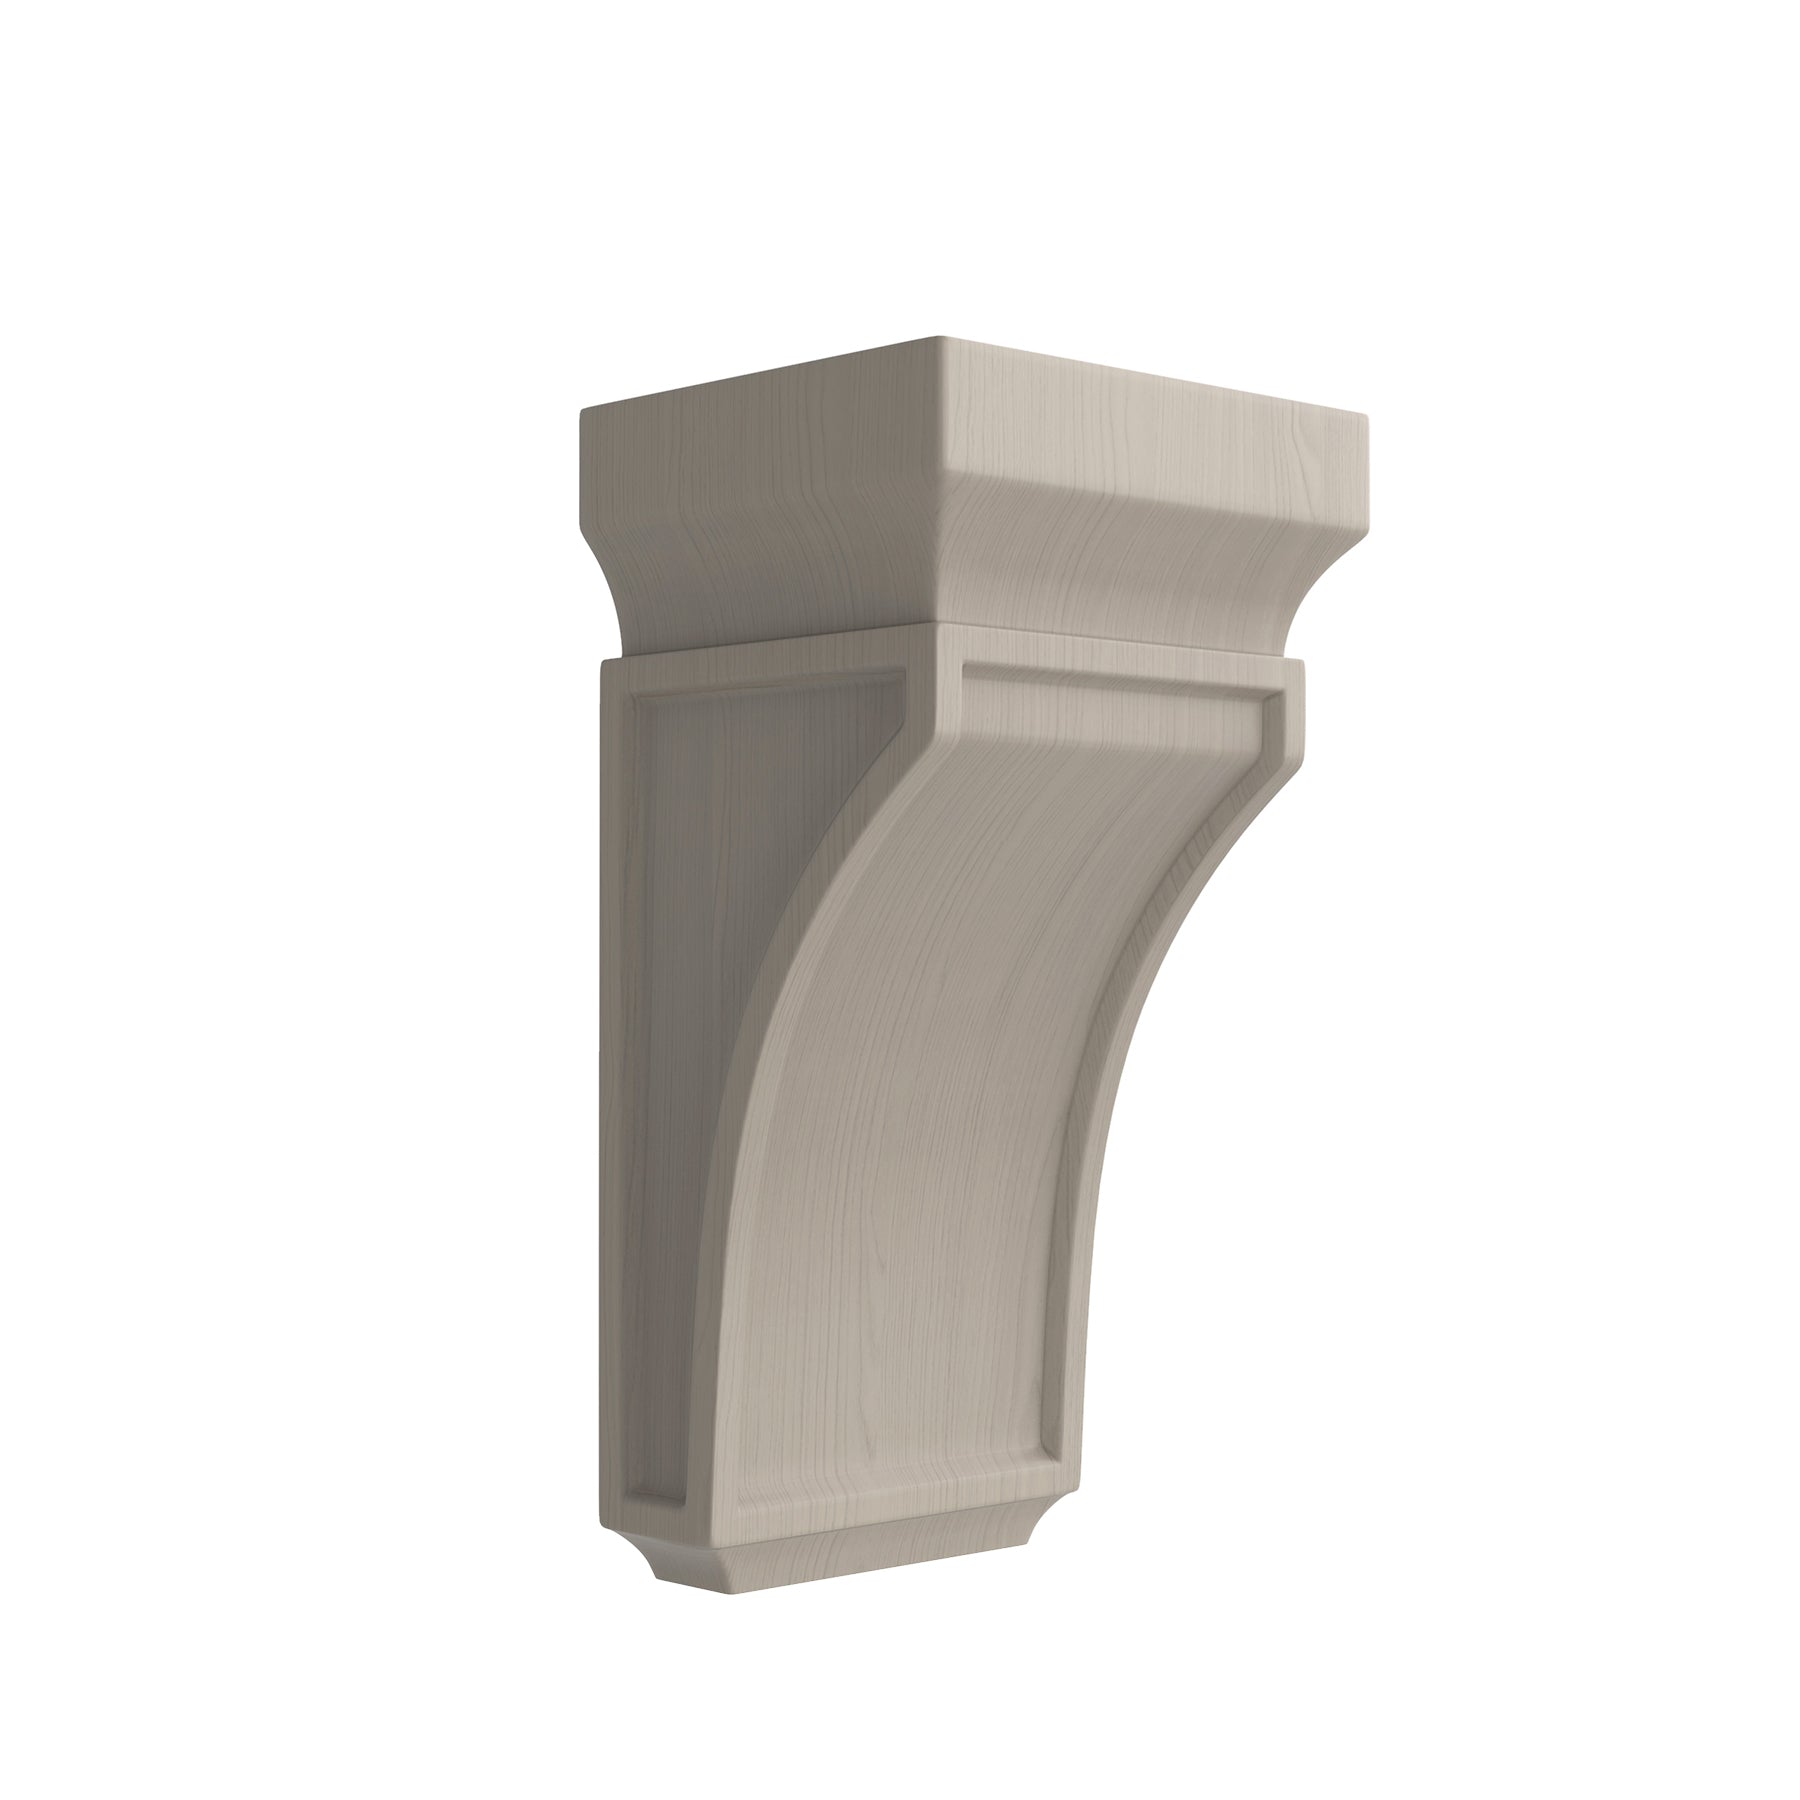 Cabinet Corbel Type M| Elegant Stone |3W x 3.625H x 6D